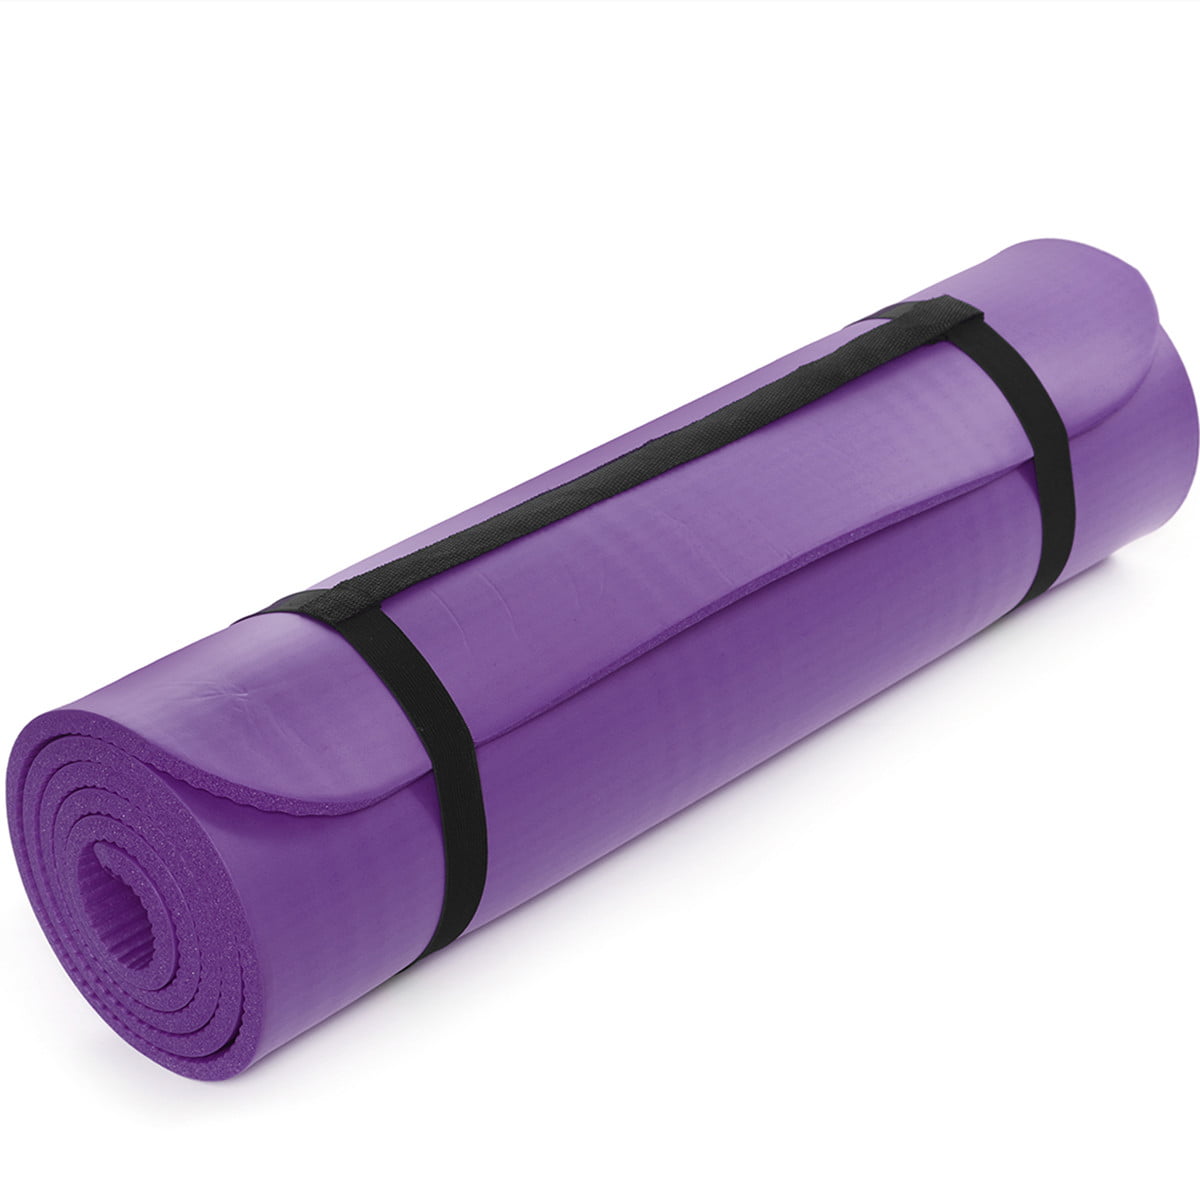 Yoga Mat 6mm Thick High Density PVC Anti-Tear Exercise W/Carrying Strap 72x24 